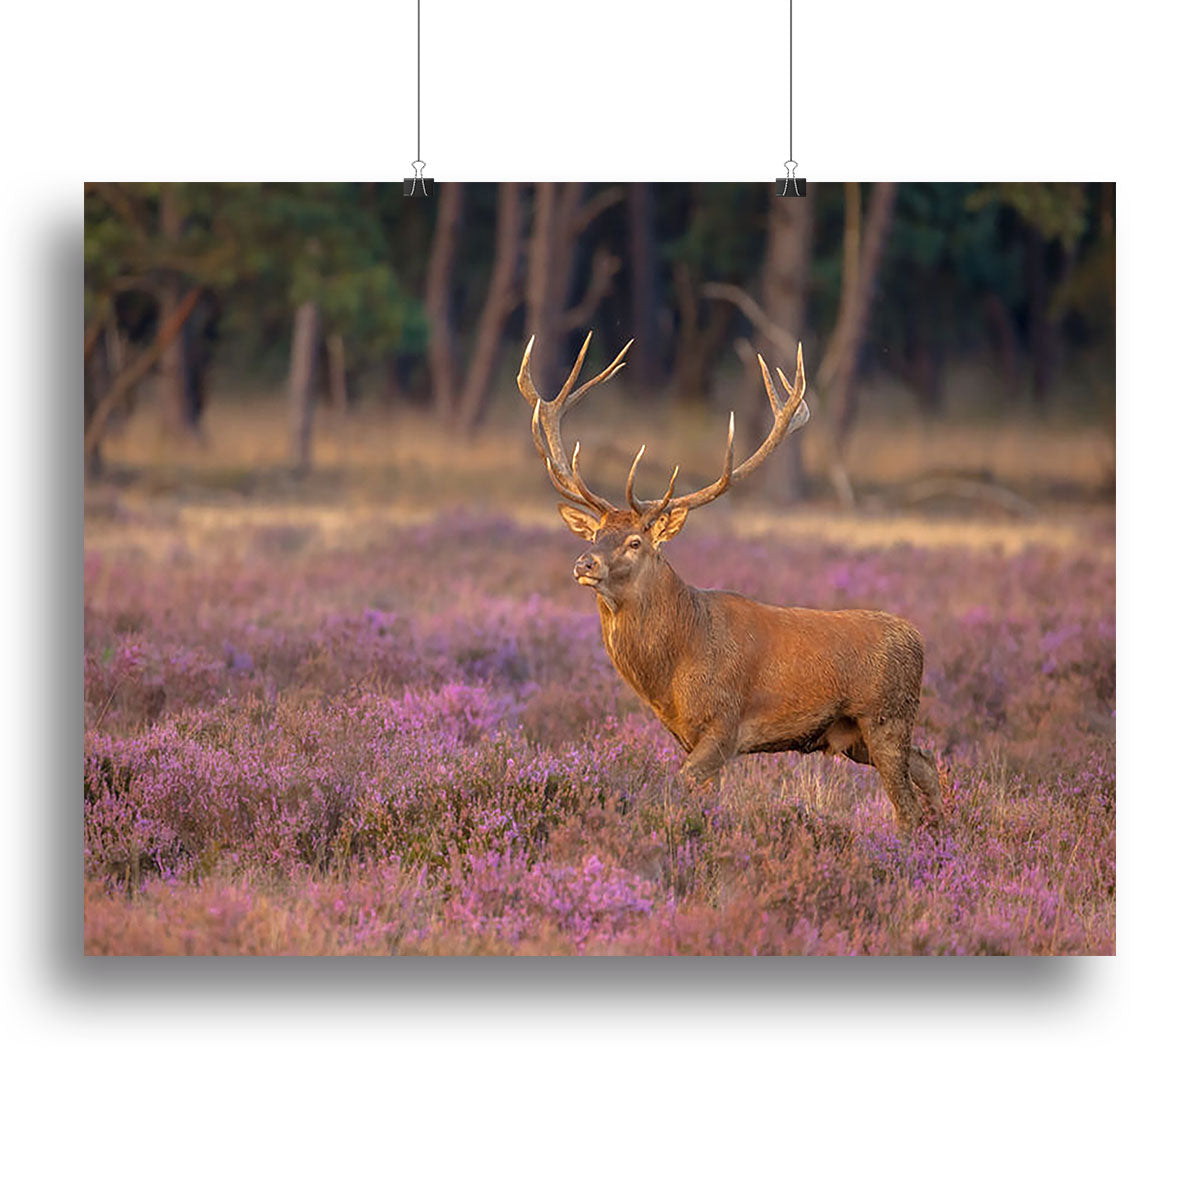 Male red deer Cervus elaphus with antlers during mating season Canvas Print or Poster - Canvas Art Rocks - 2